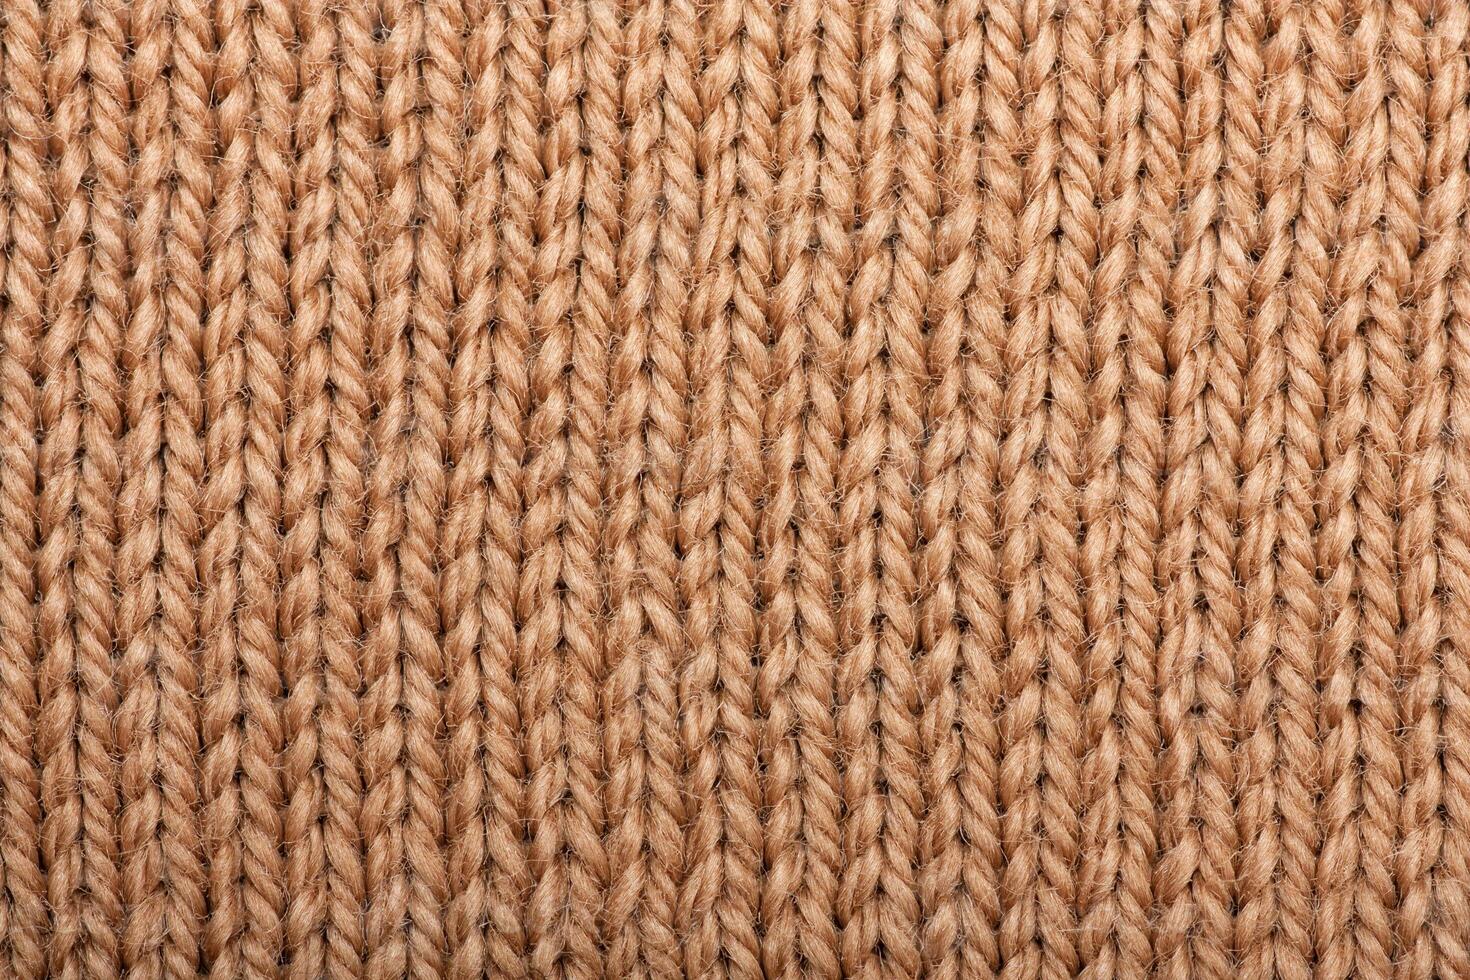 tricotado lã textura foto